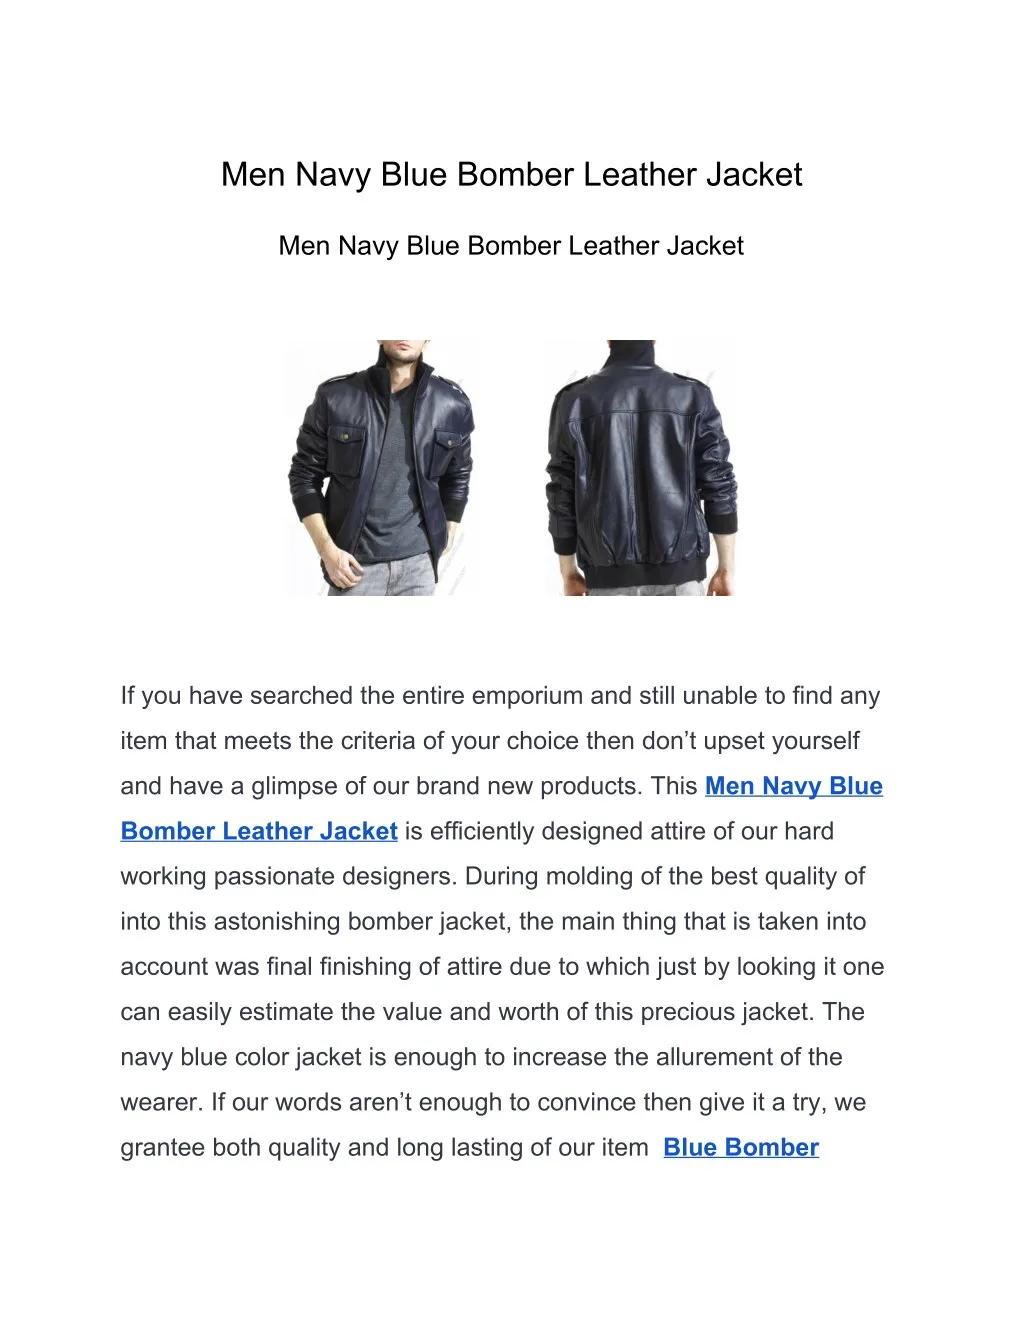 men navy blue bomber leather jacket